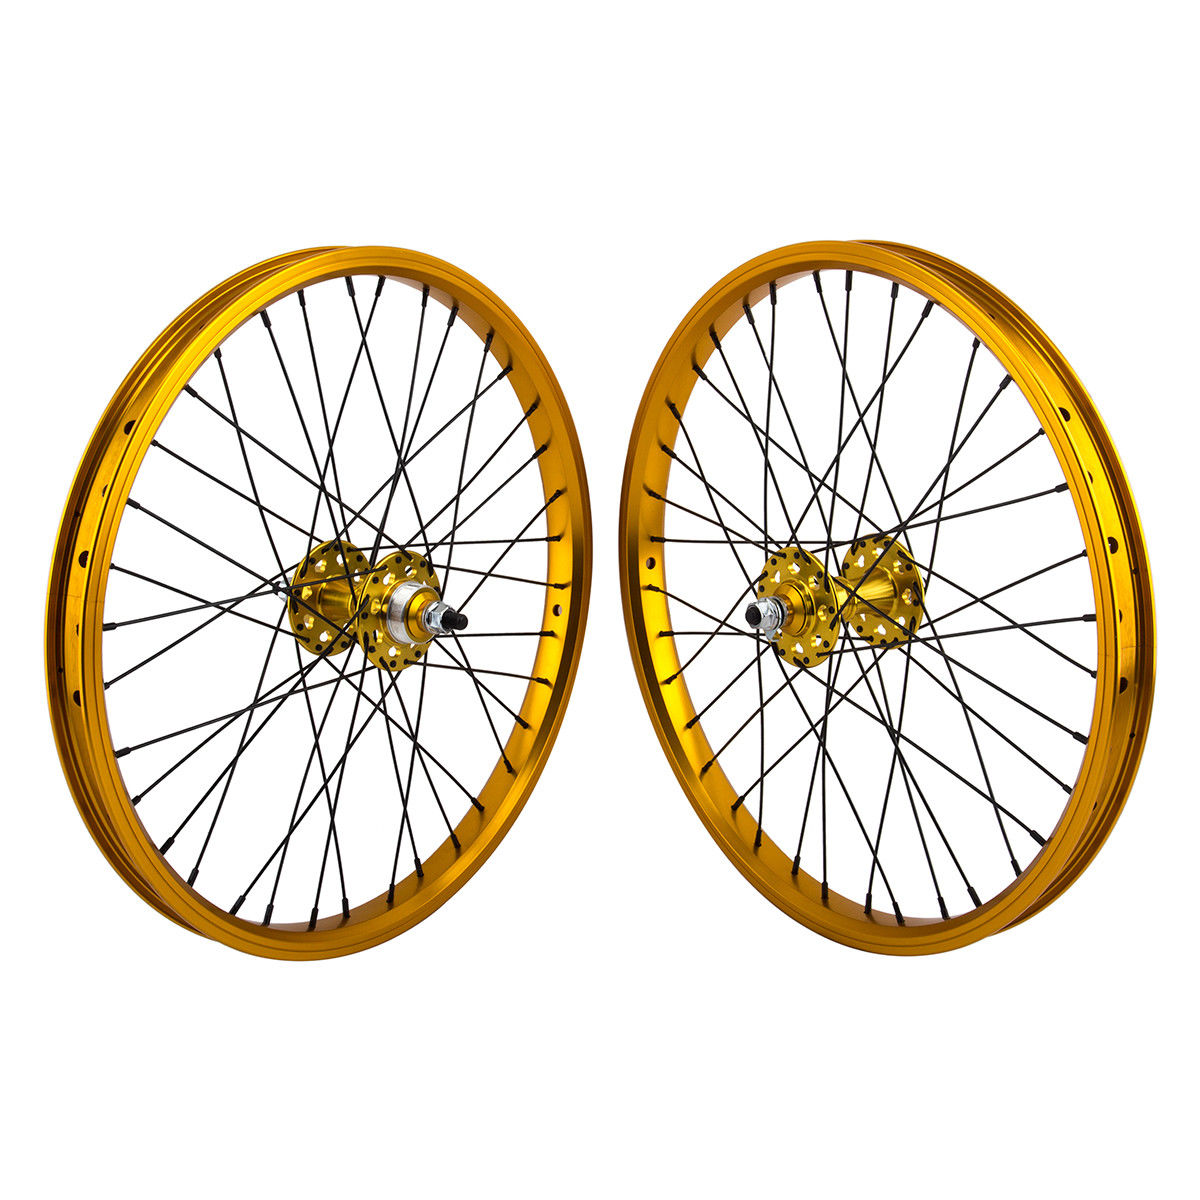 20" SE Racing Wheelset - Pair - 36H - Double Wall - Sealed Bearing - Freewheel - Gold